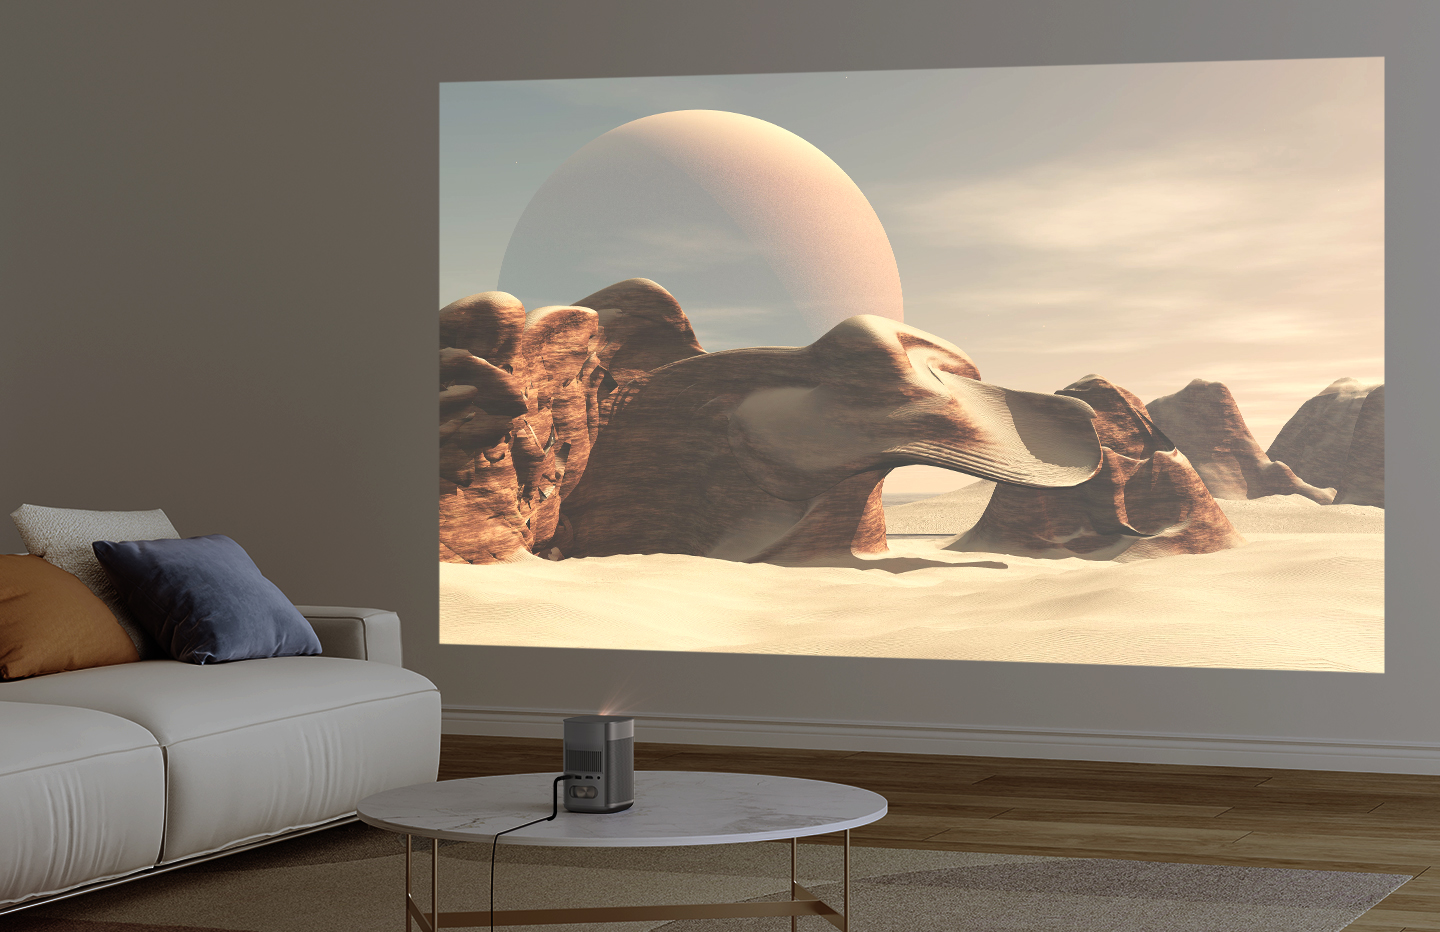 MoGo 2 projector in living room